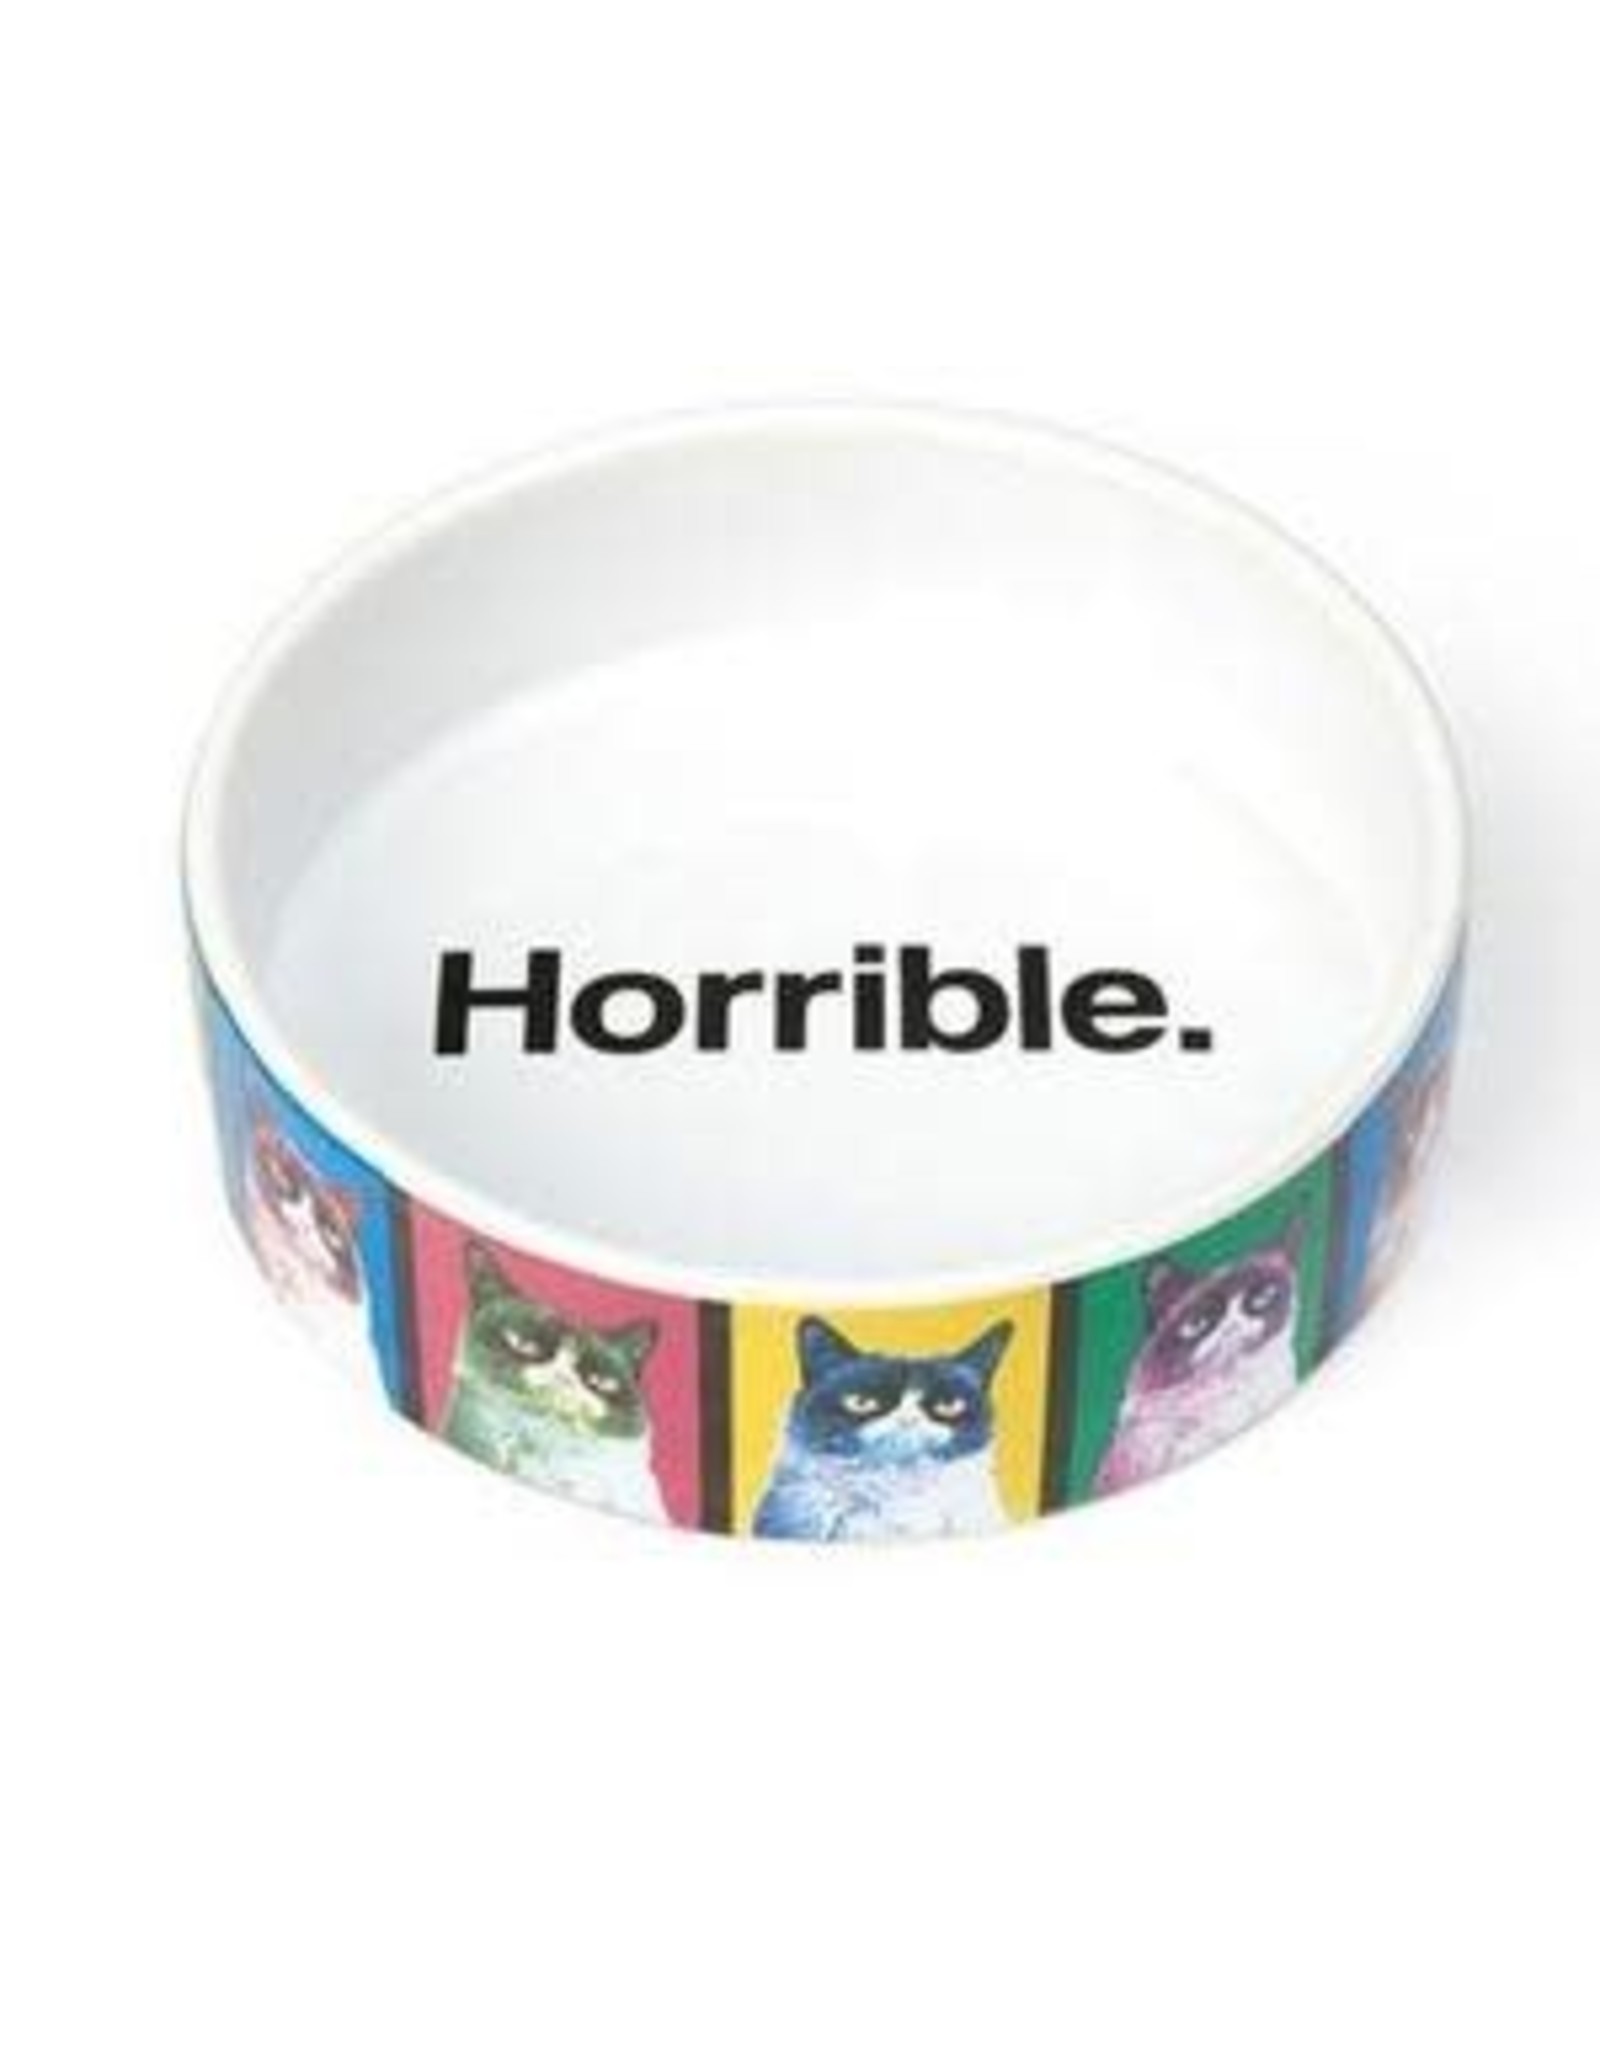 PetRageous Grumpy Cat Pop Art Bowl (1cup) Horrible.